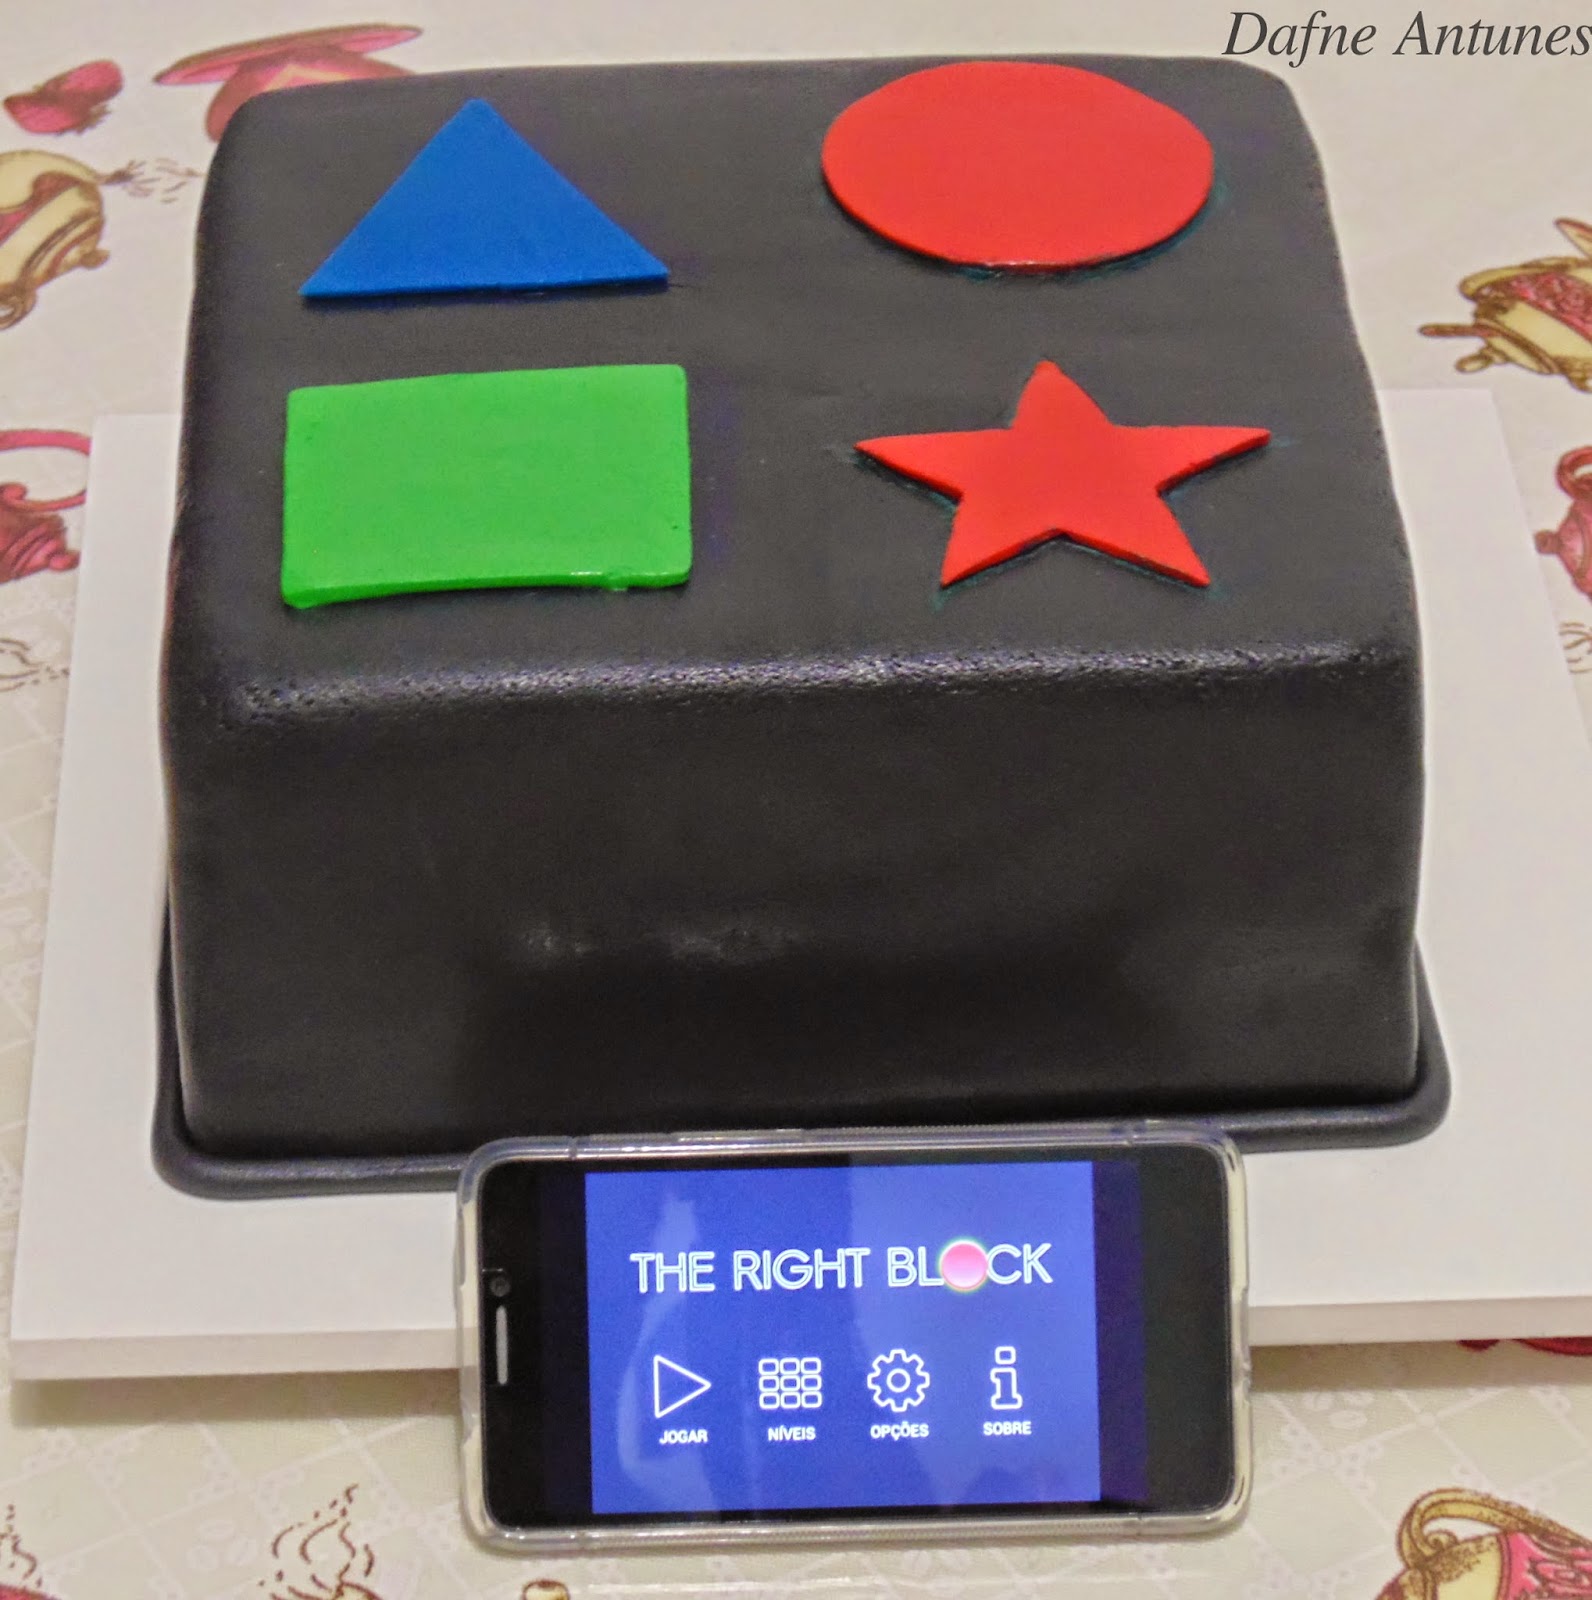 The Right Block cake